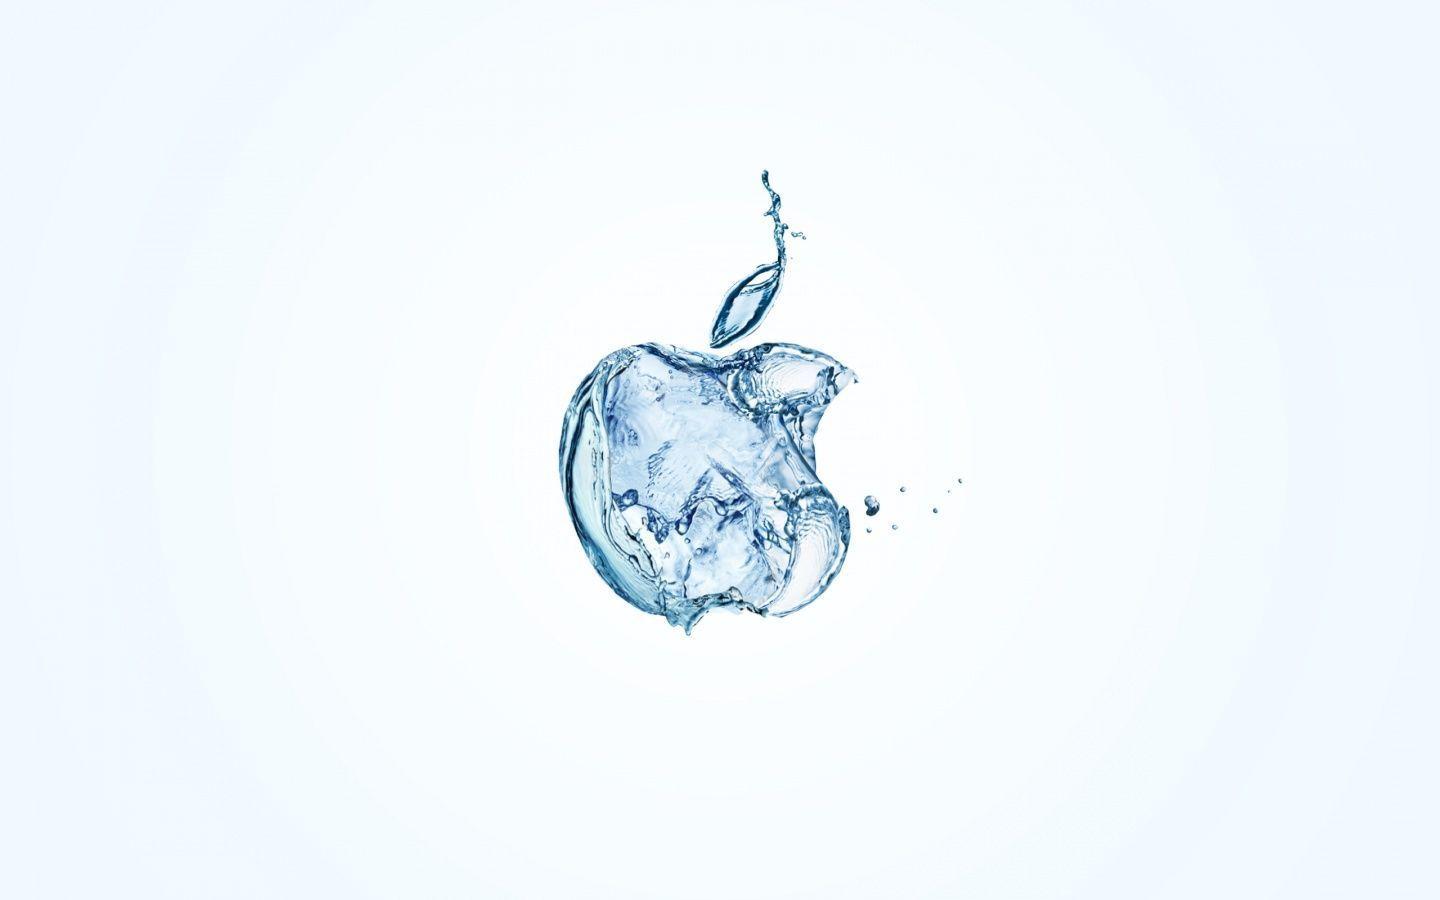 Apple Water Wallpaper